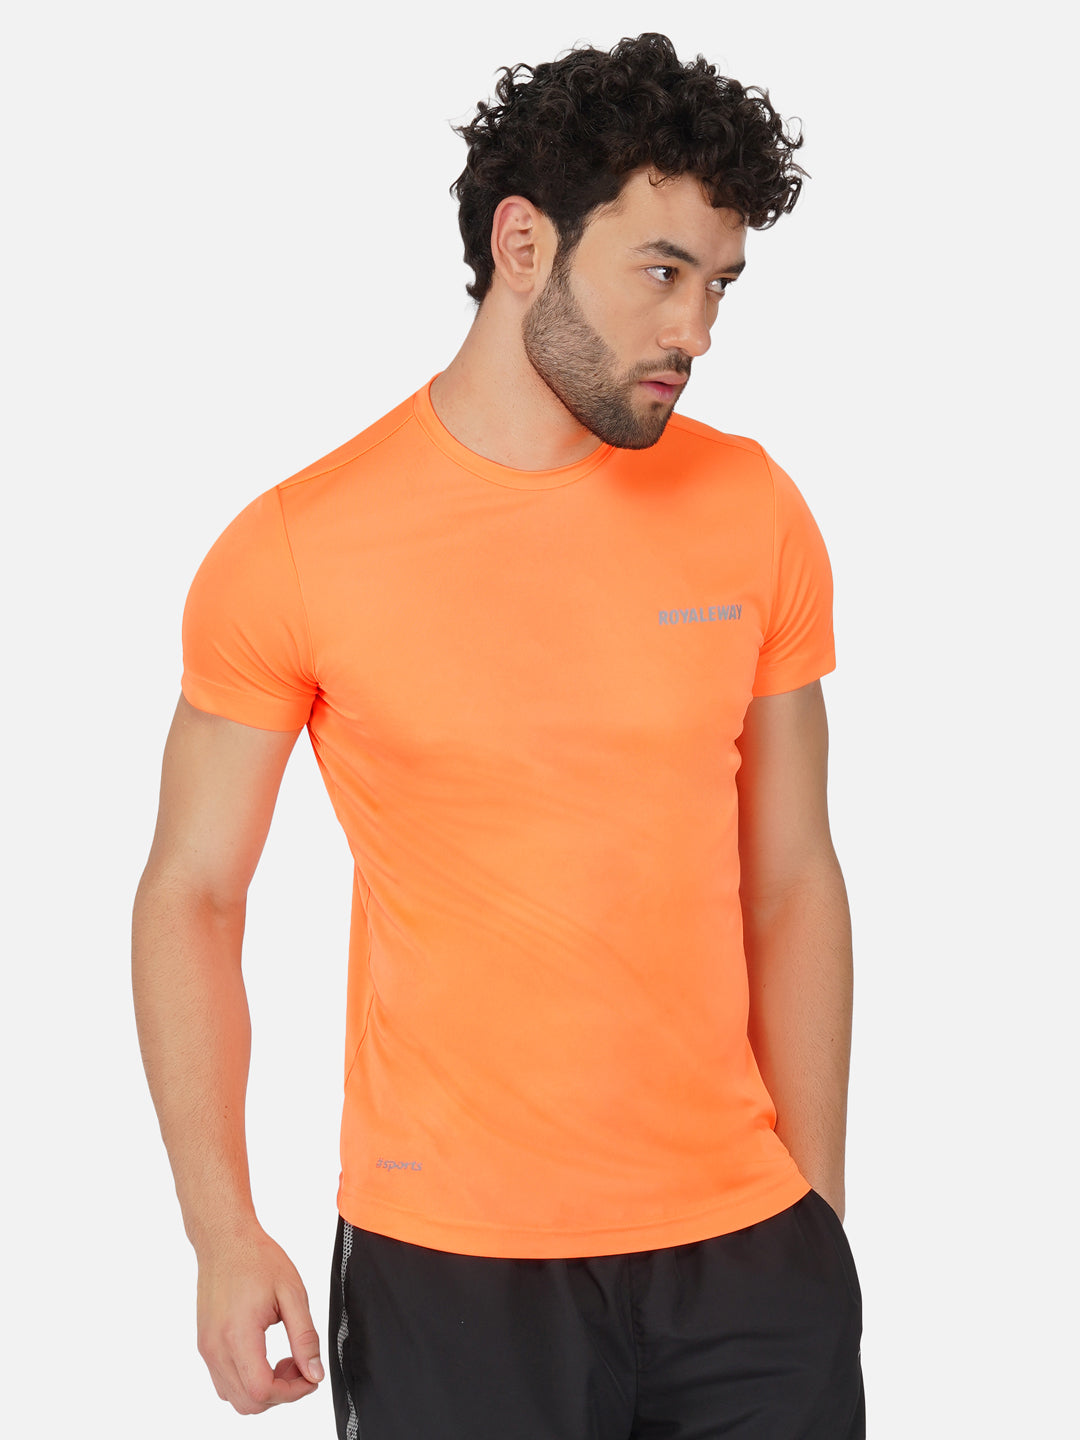 DriSOFT T Shirt Fluorescent Orange Men RWM2014